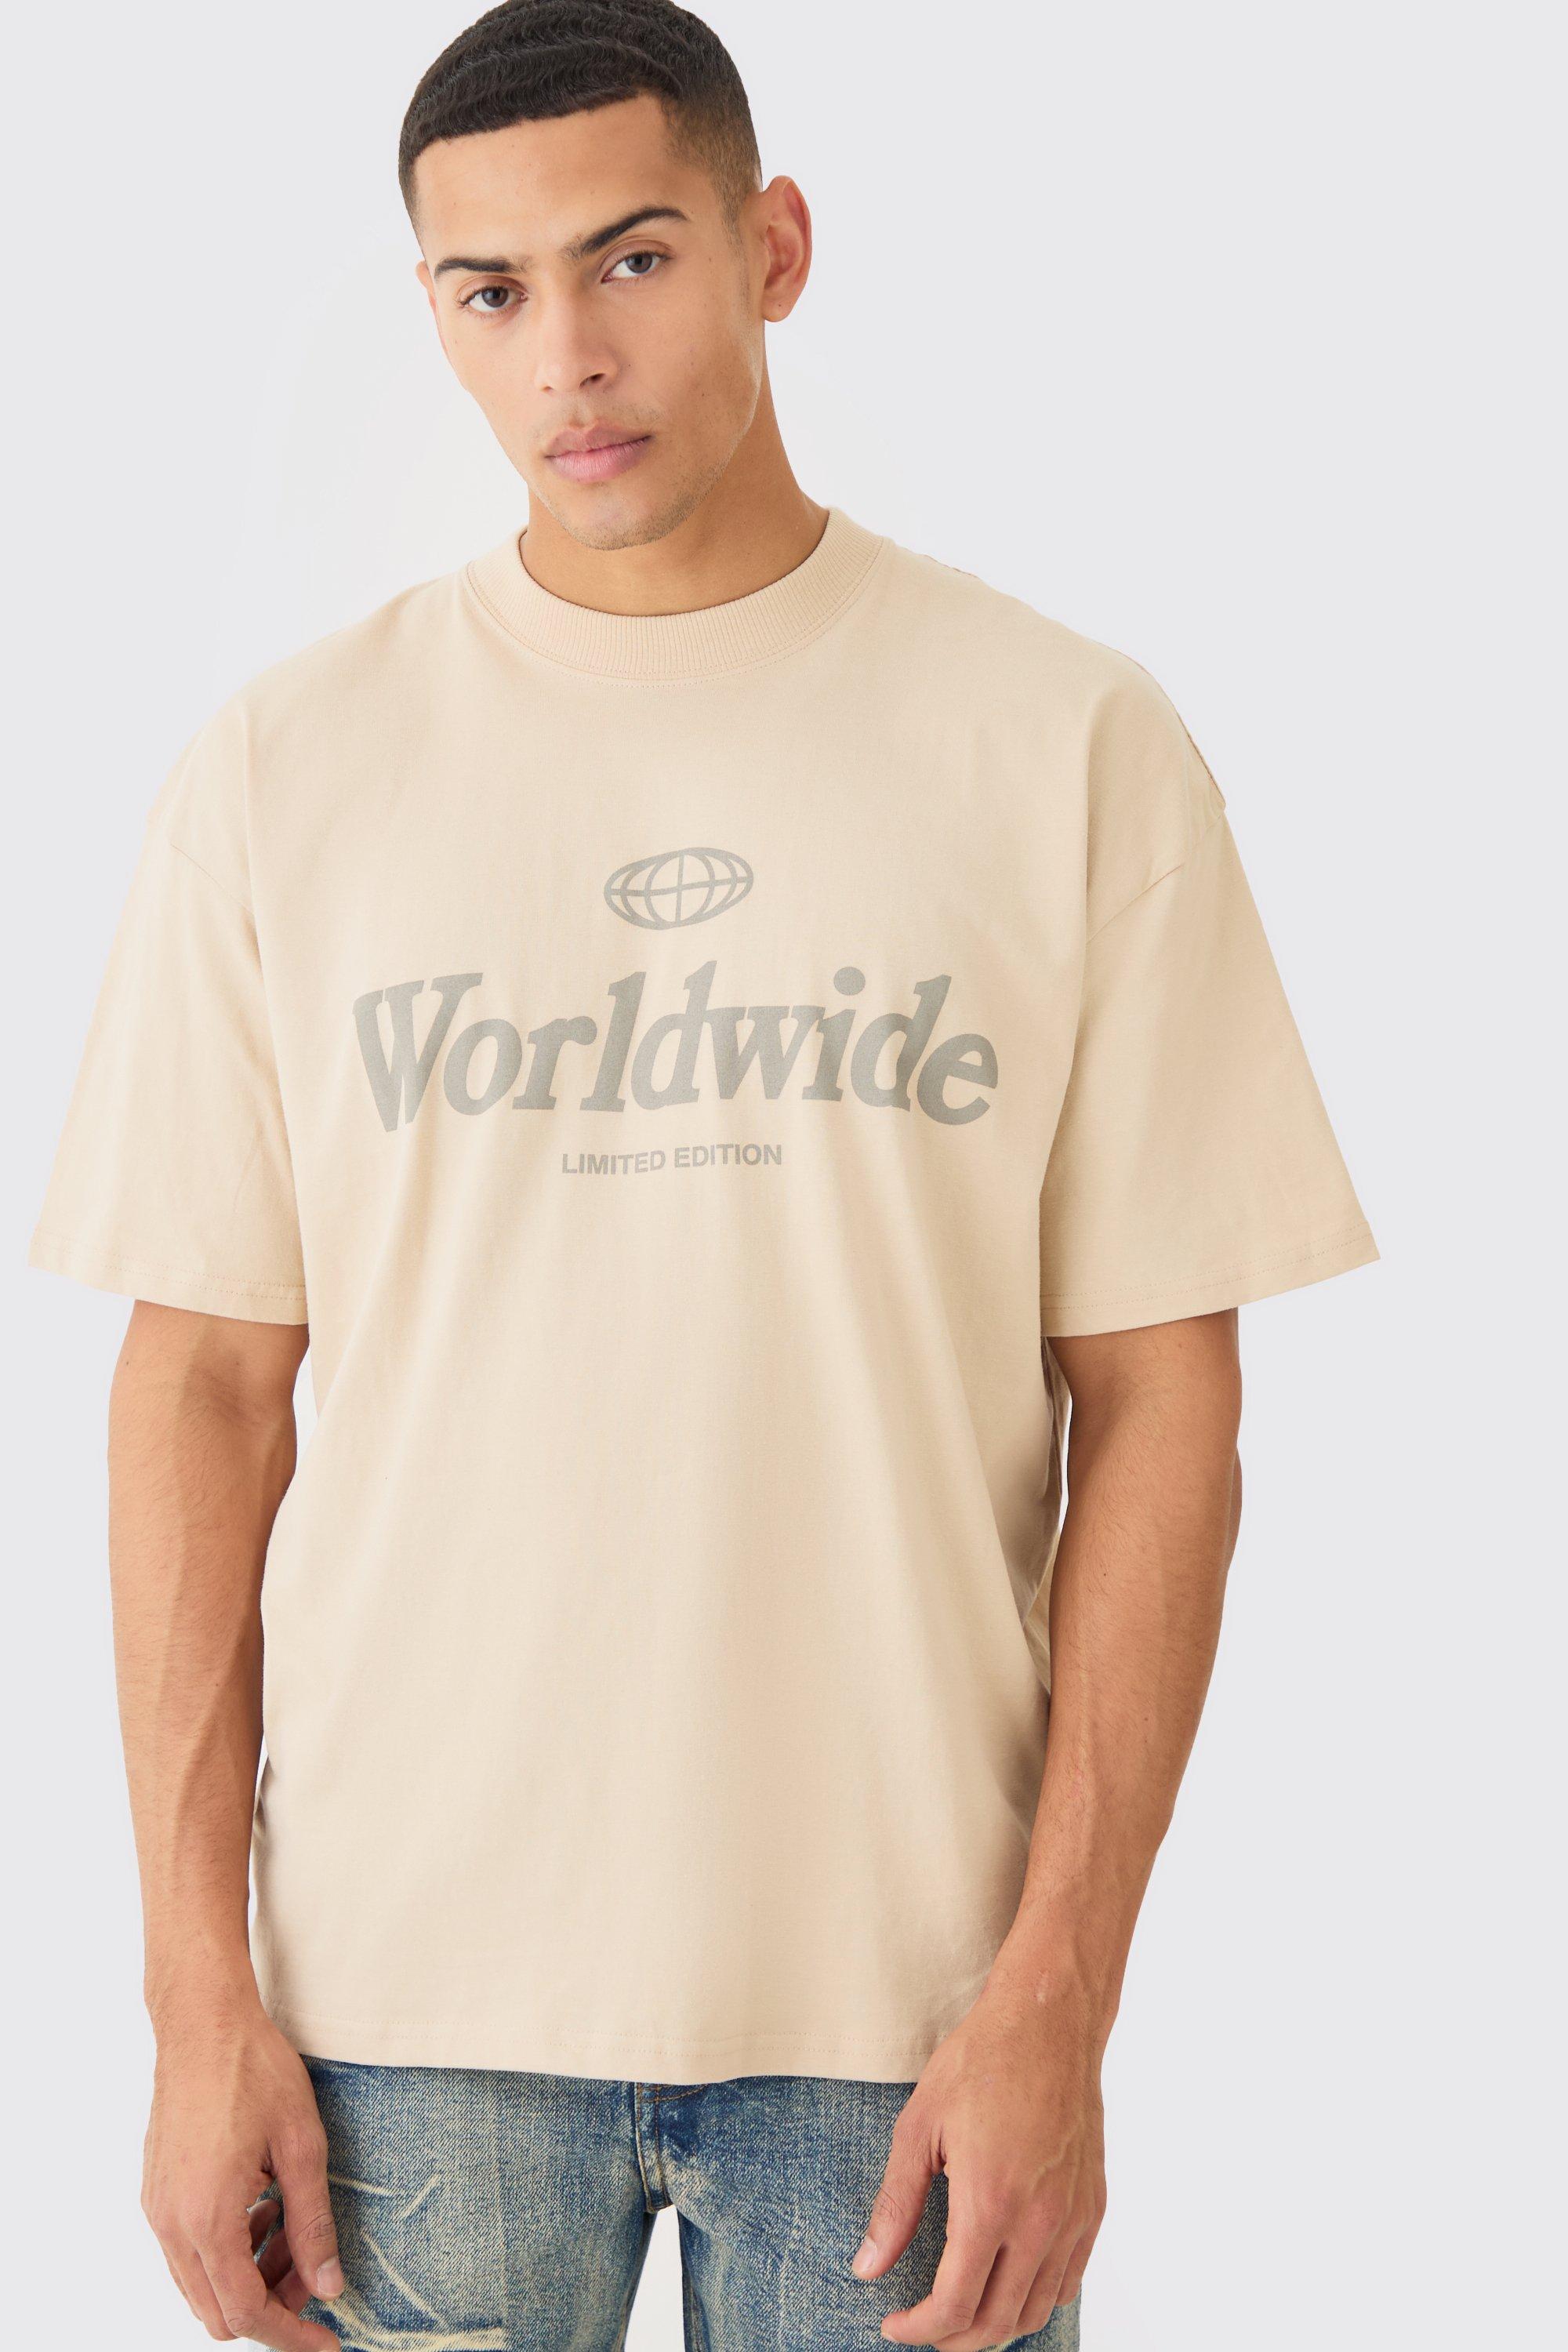 Image of T-shirt oversize Worldwide, Beige